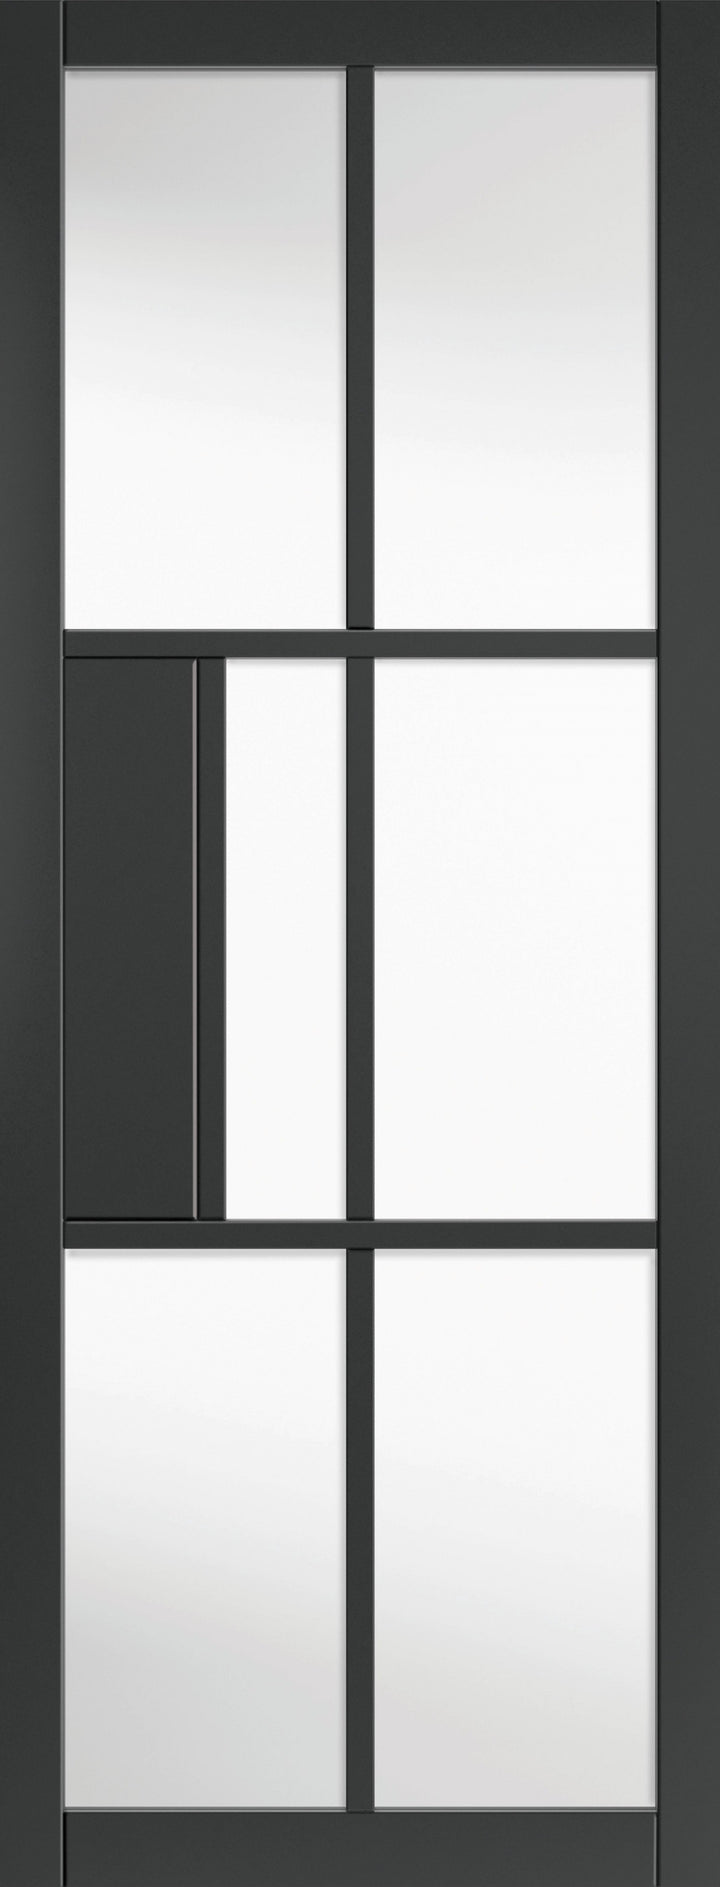 Civic Black Glazed Double Industrial Style Pocket Door Set